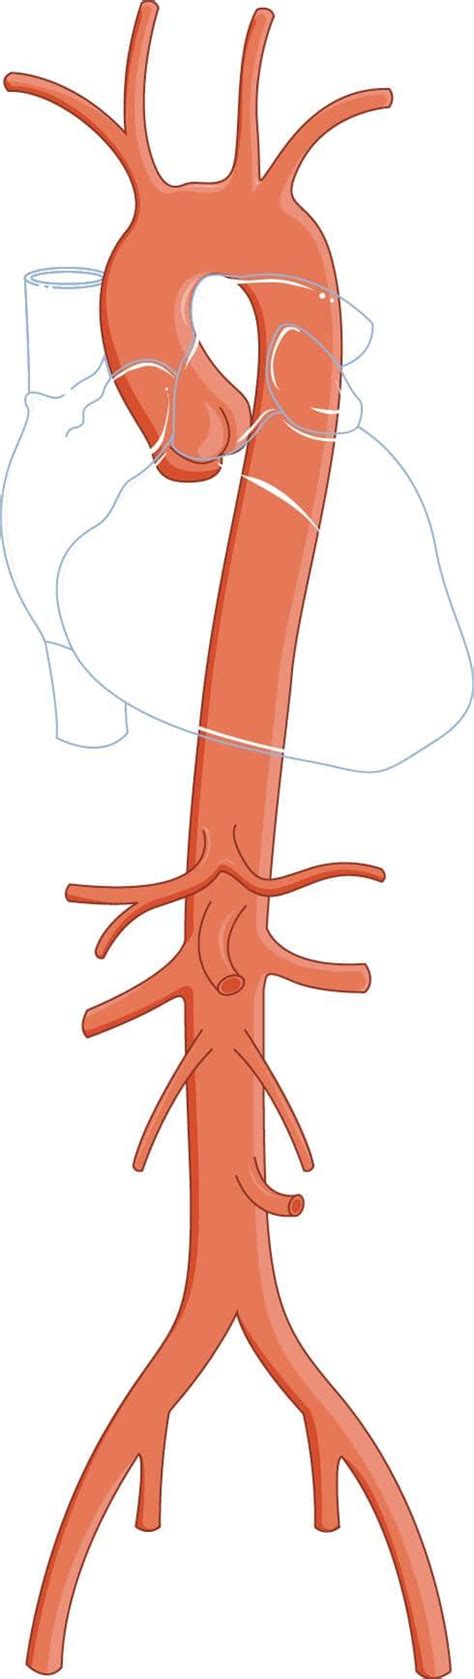 Arteria Aorta Partes Ubicaci N Anatomia Funci N Importancia Cl Nica